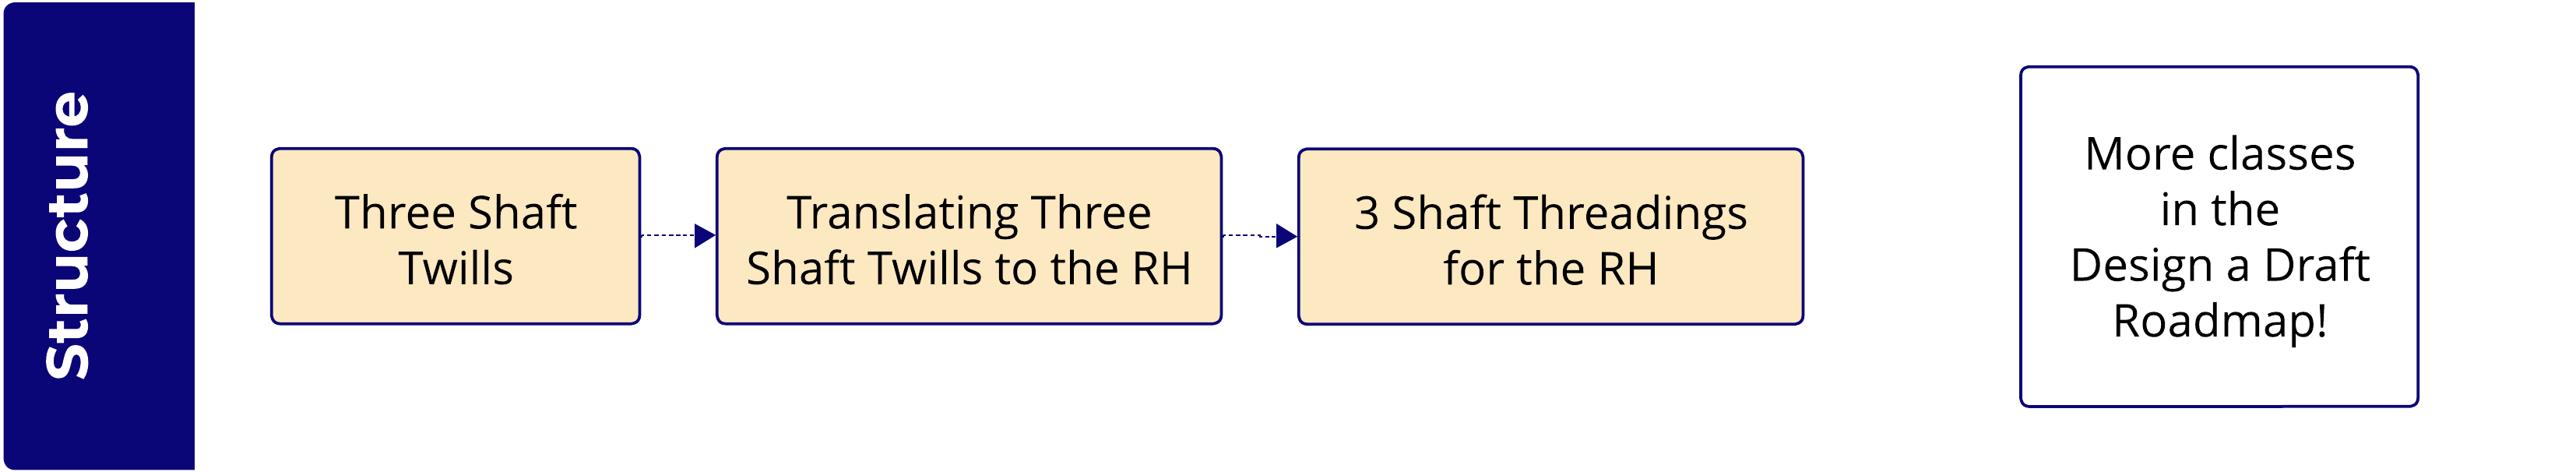 rigid heddle roadmap structure